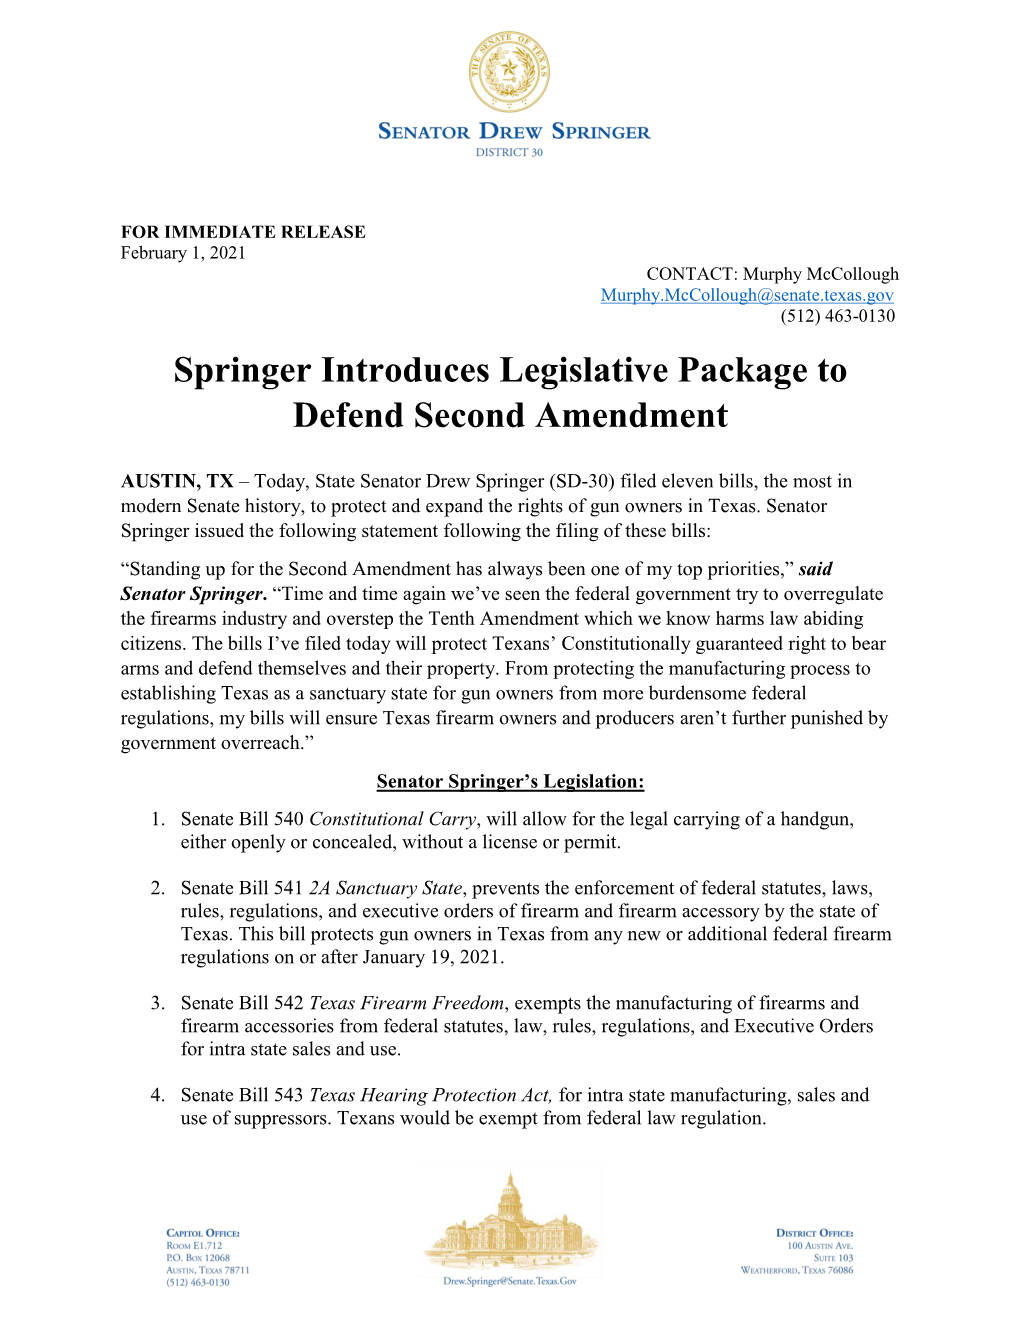 Springer Introduces Legislative Package to Defend Second